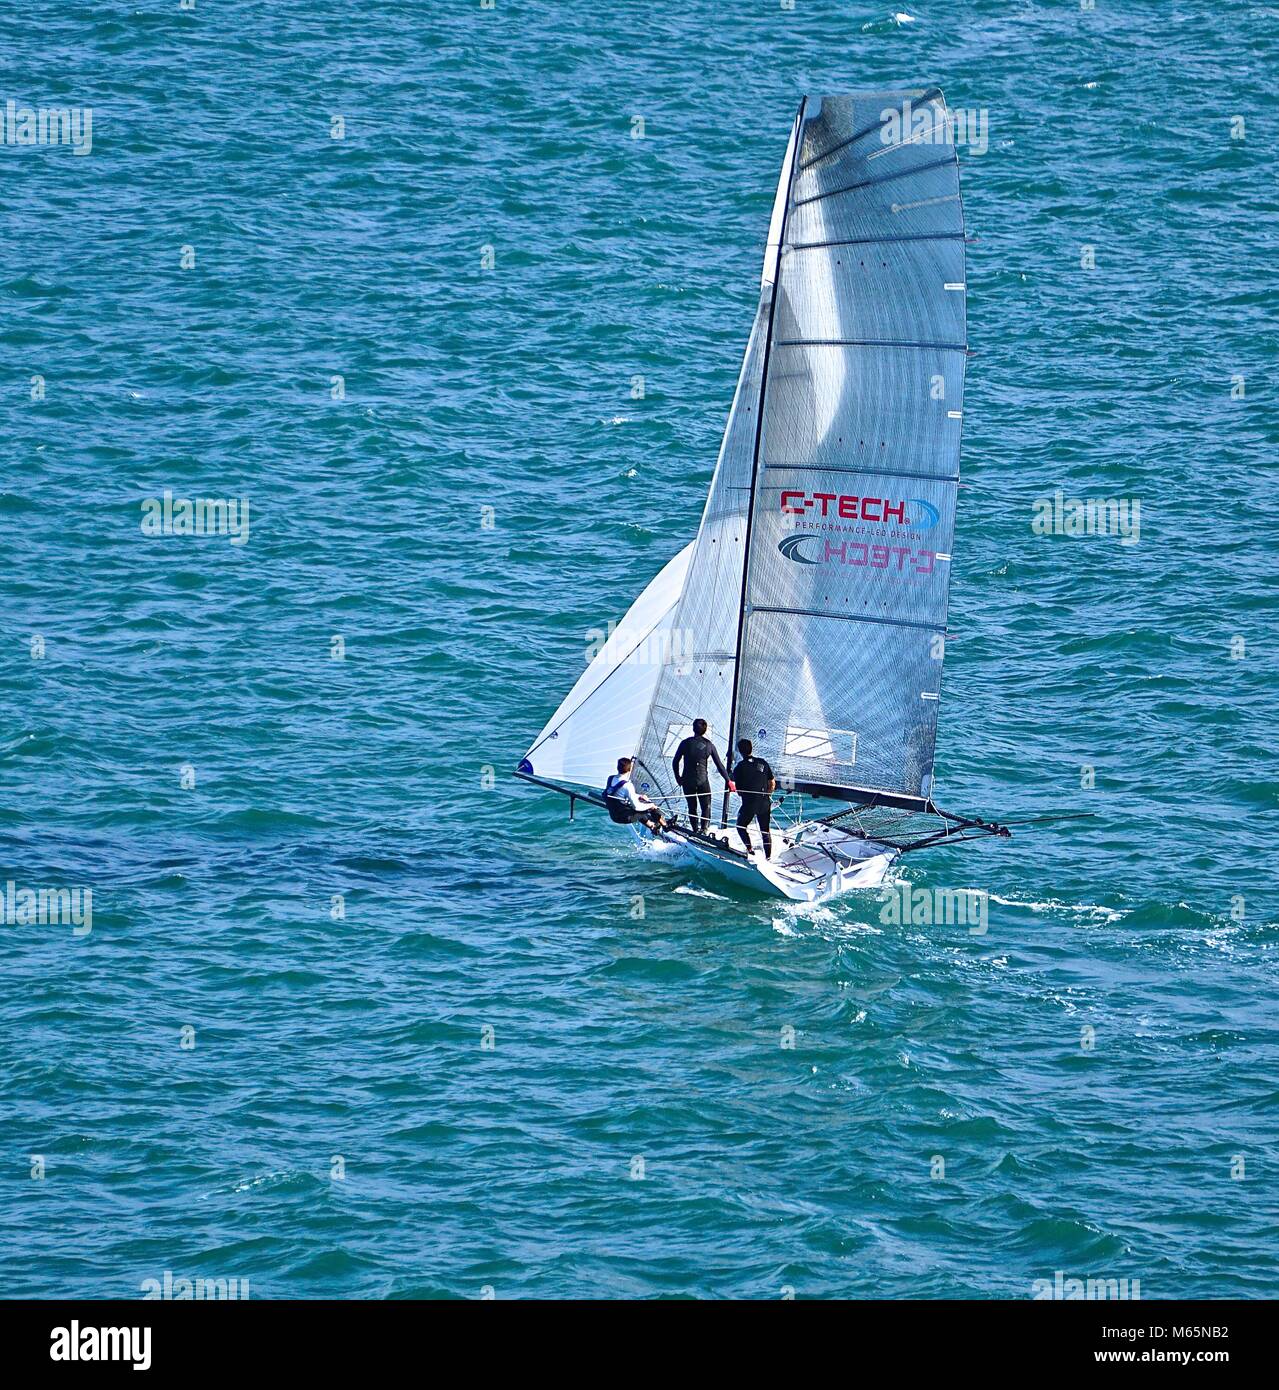 Sail boat navigating a race Stock Photo